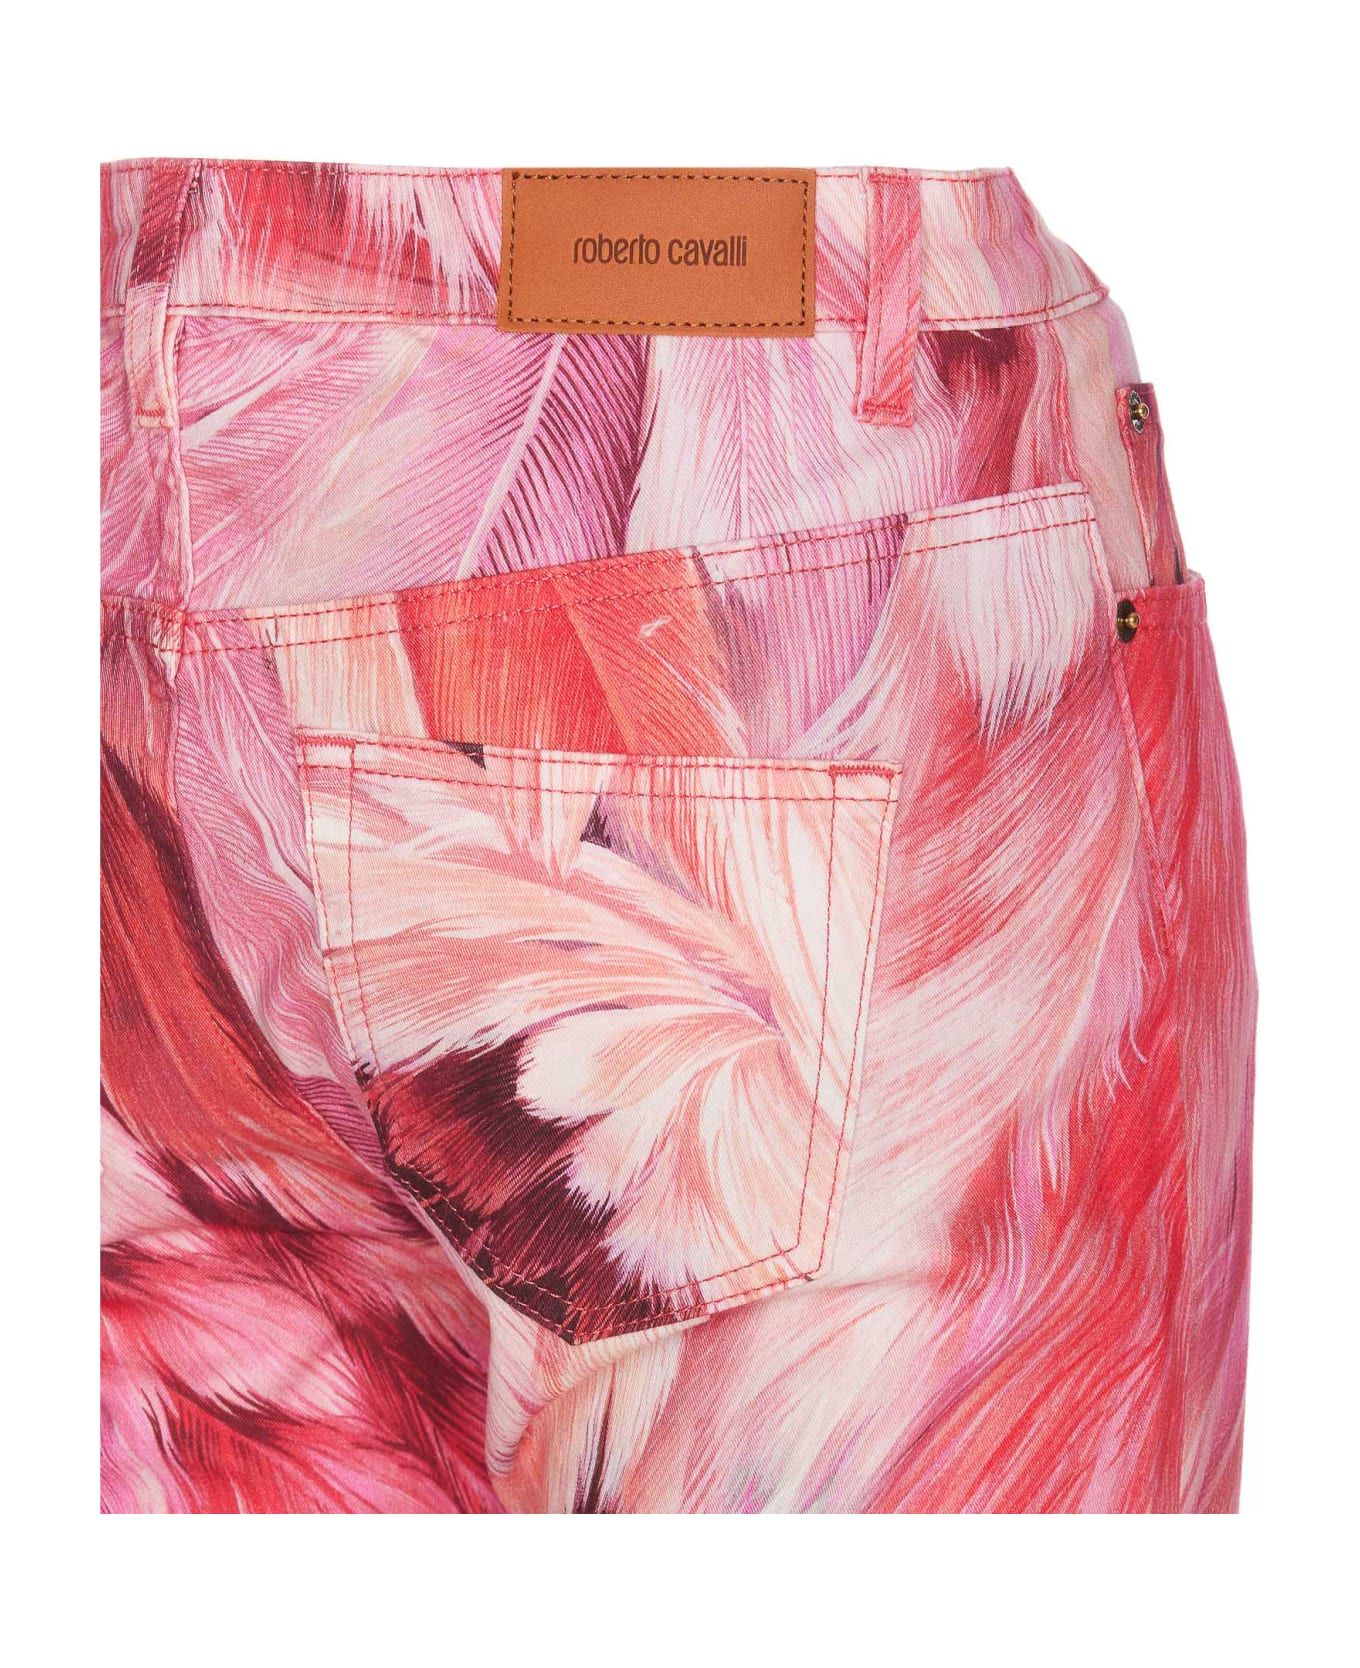 Roberto Cavalli Printed Skinny Jeans - Pink